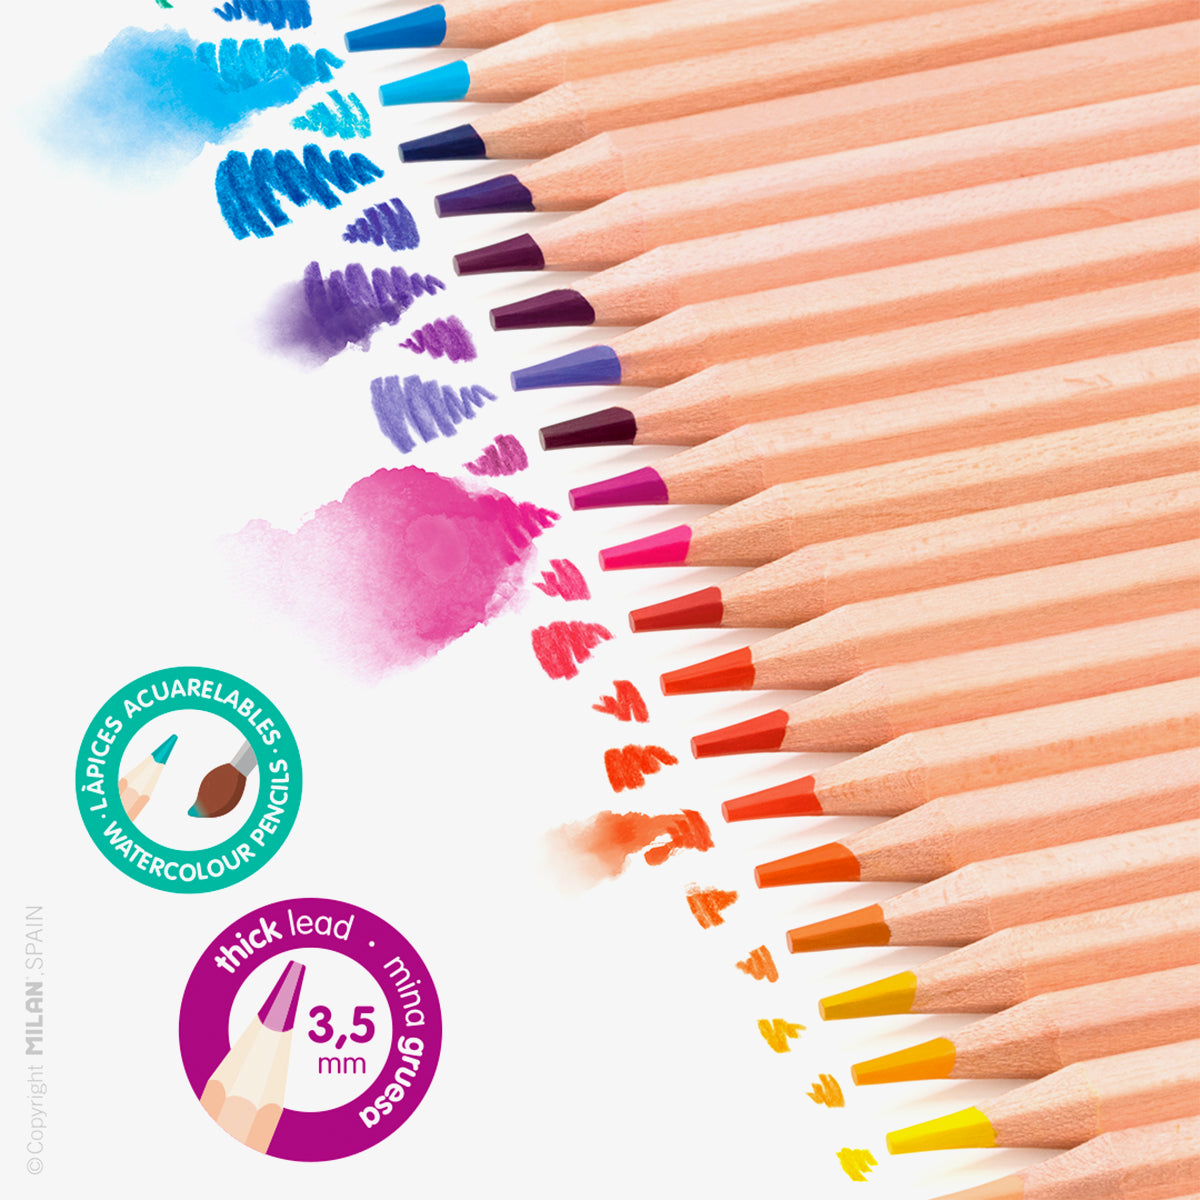 36 lápices acuarelables de colores con mina gruesa (3,5 mm) en caja metálica